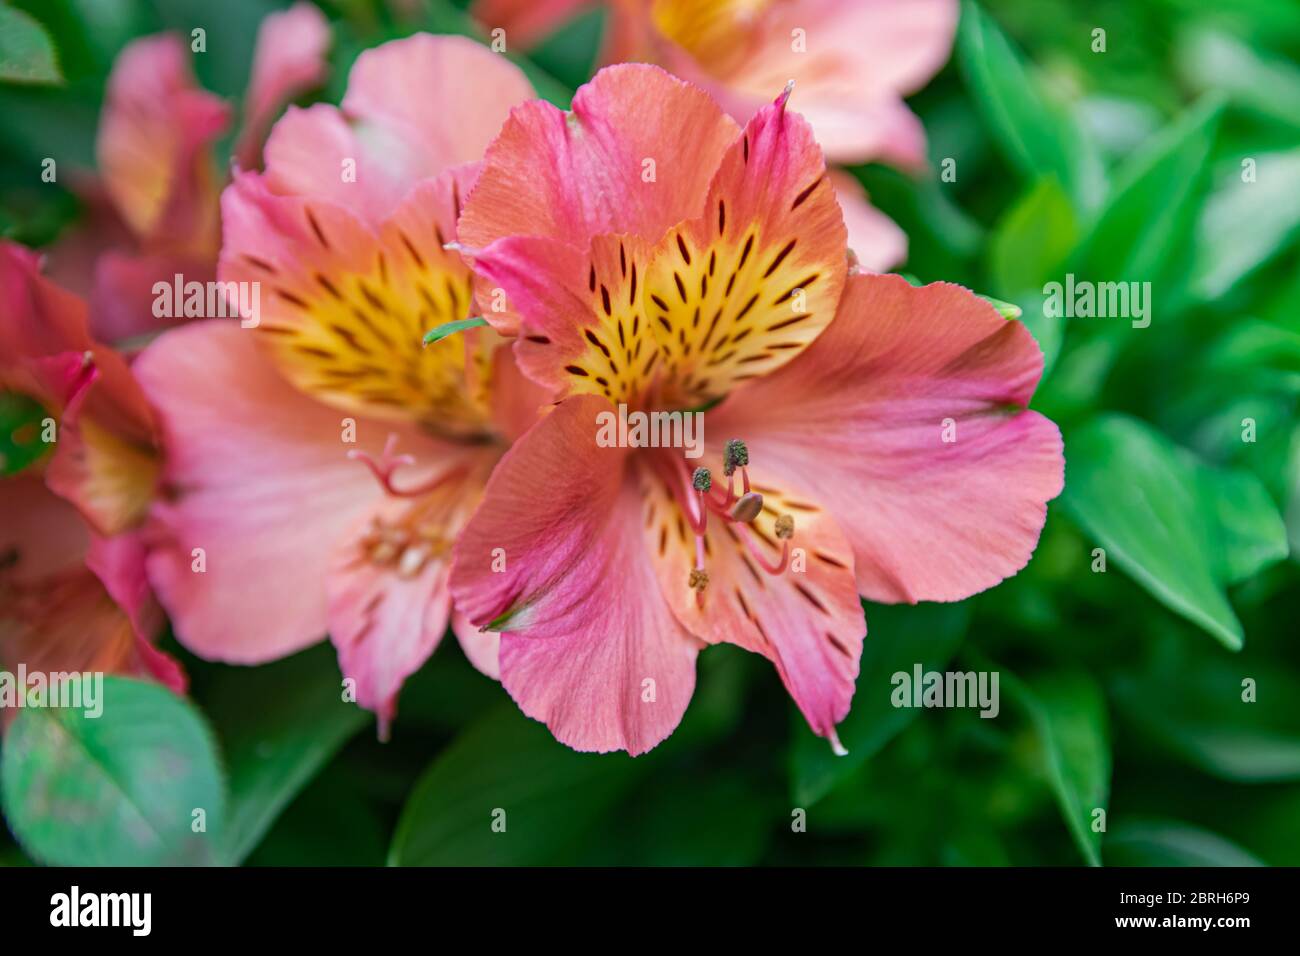 Pink Peruvian lily, (altroemeria aurantiaca ligtu), blooming with green vegetation background Stock Photo